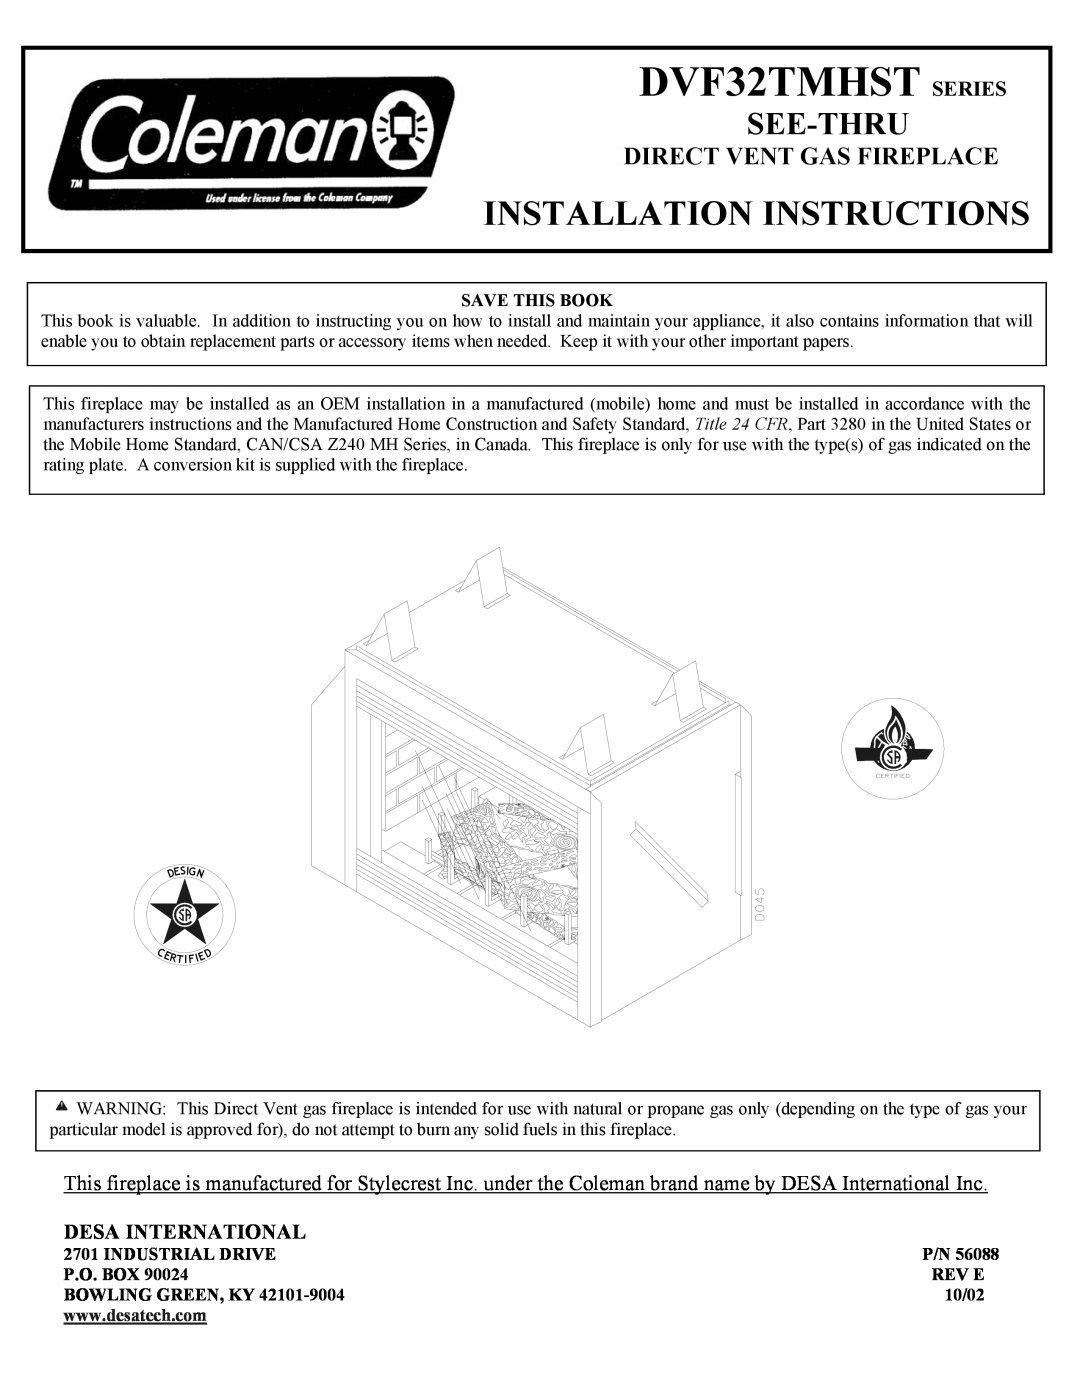 Desa DVF32TMHST installation instructions Installation Instructions, See-Thru, Desa International, Save This Book, Rev E 